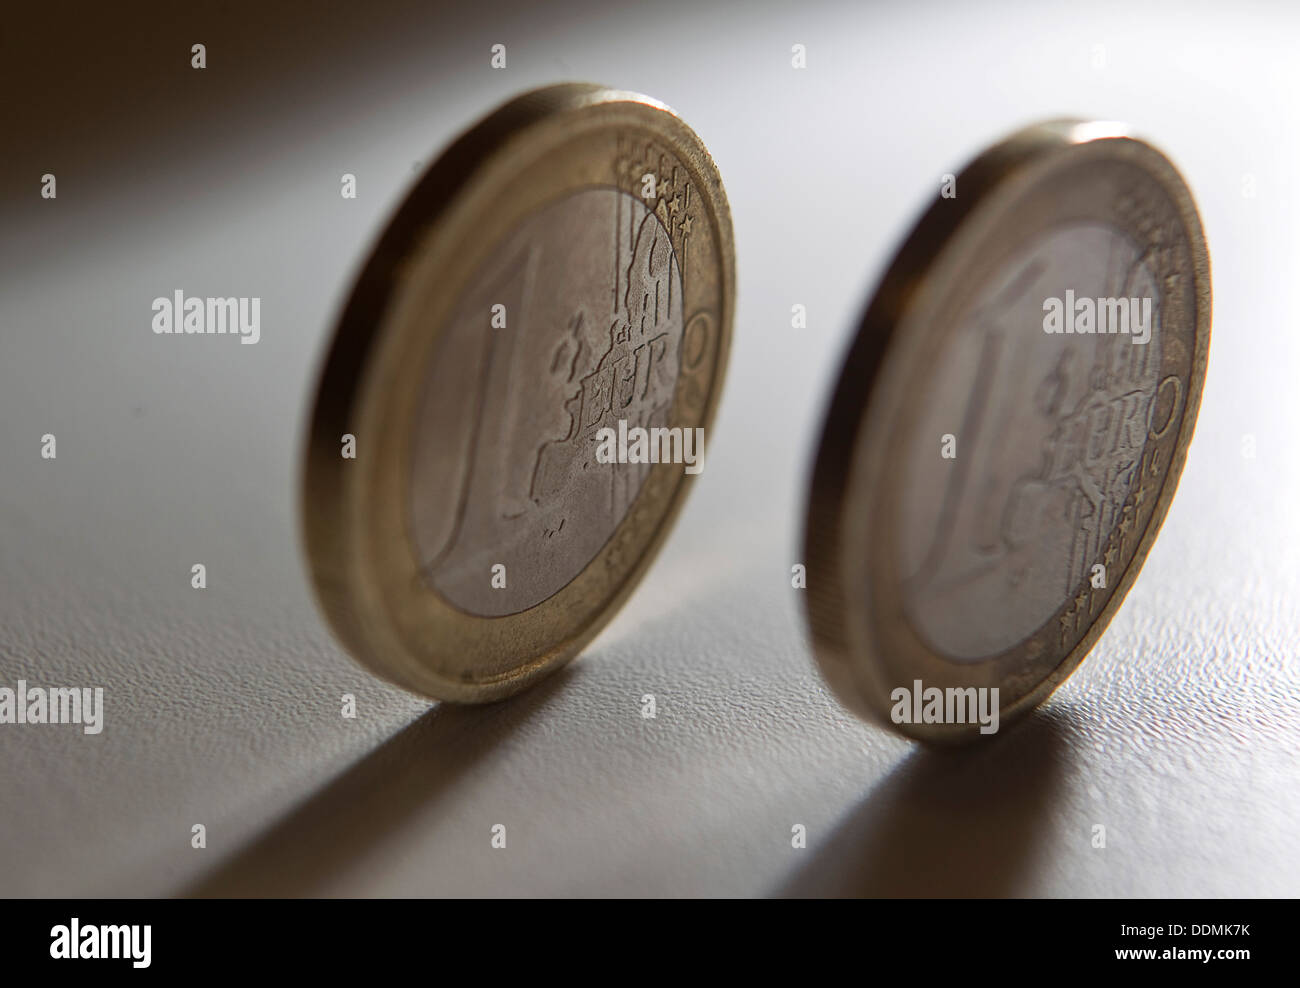 Euro moneys used in the Eurozone. Stock Photo